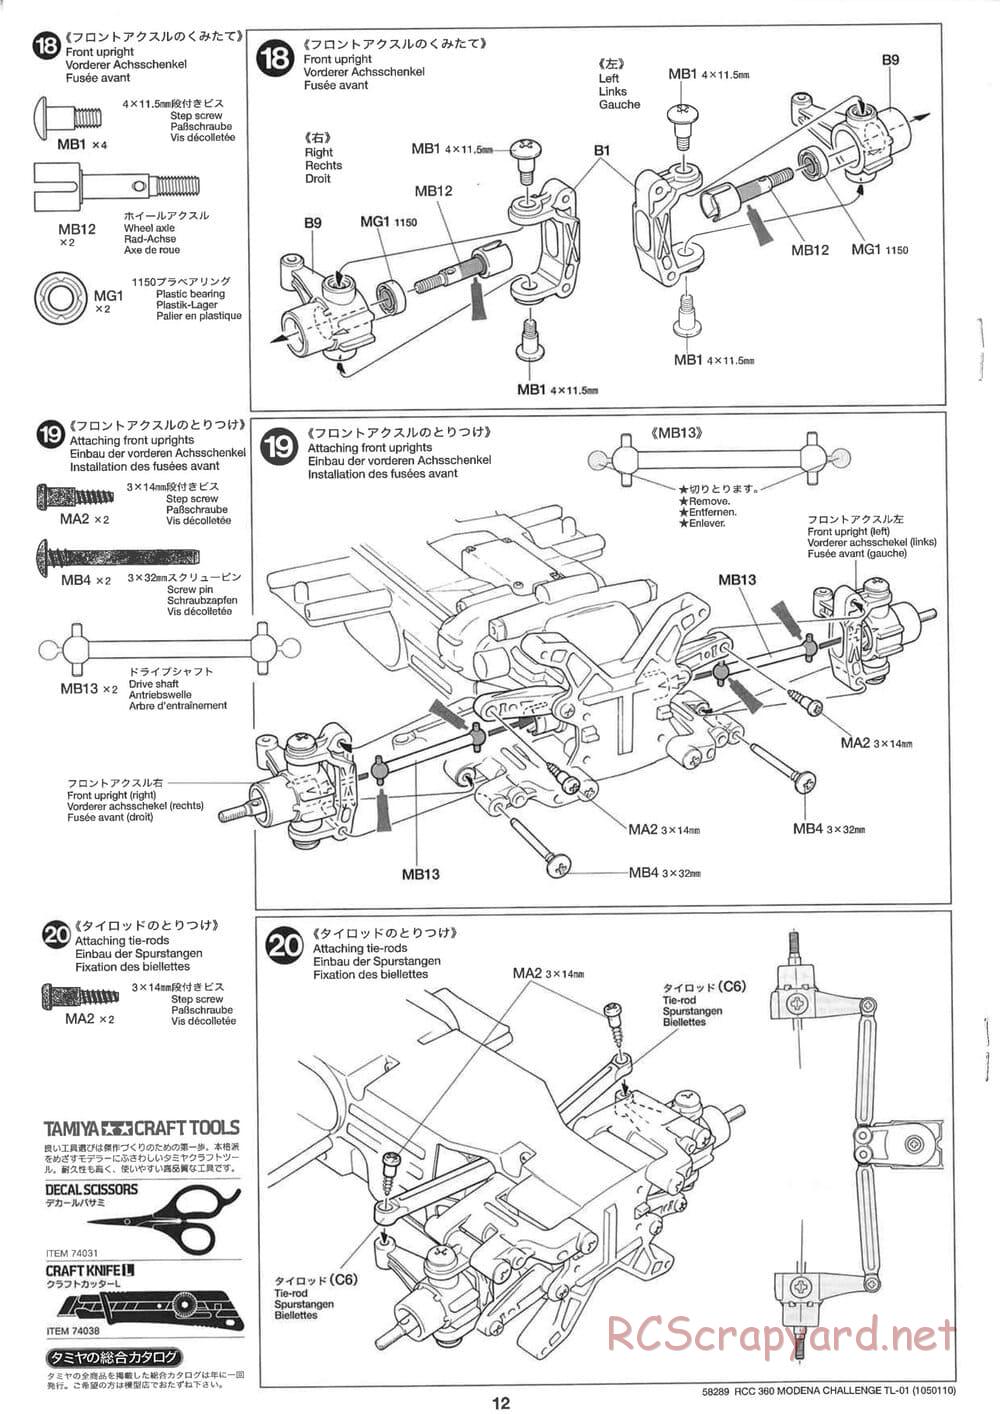 Tamiya - Ferrari 360 Modena Challenge - TL-01 Chassis - Manual - Page 12